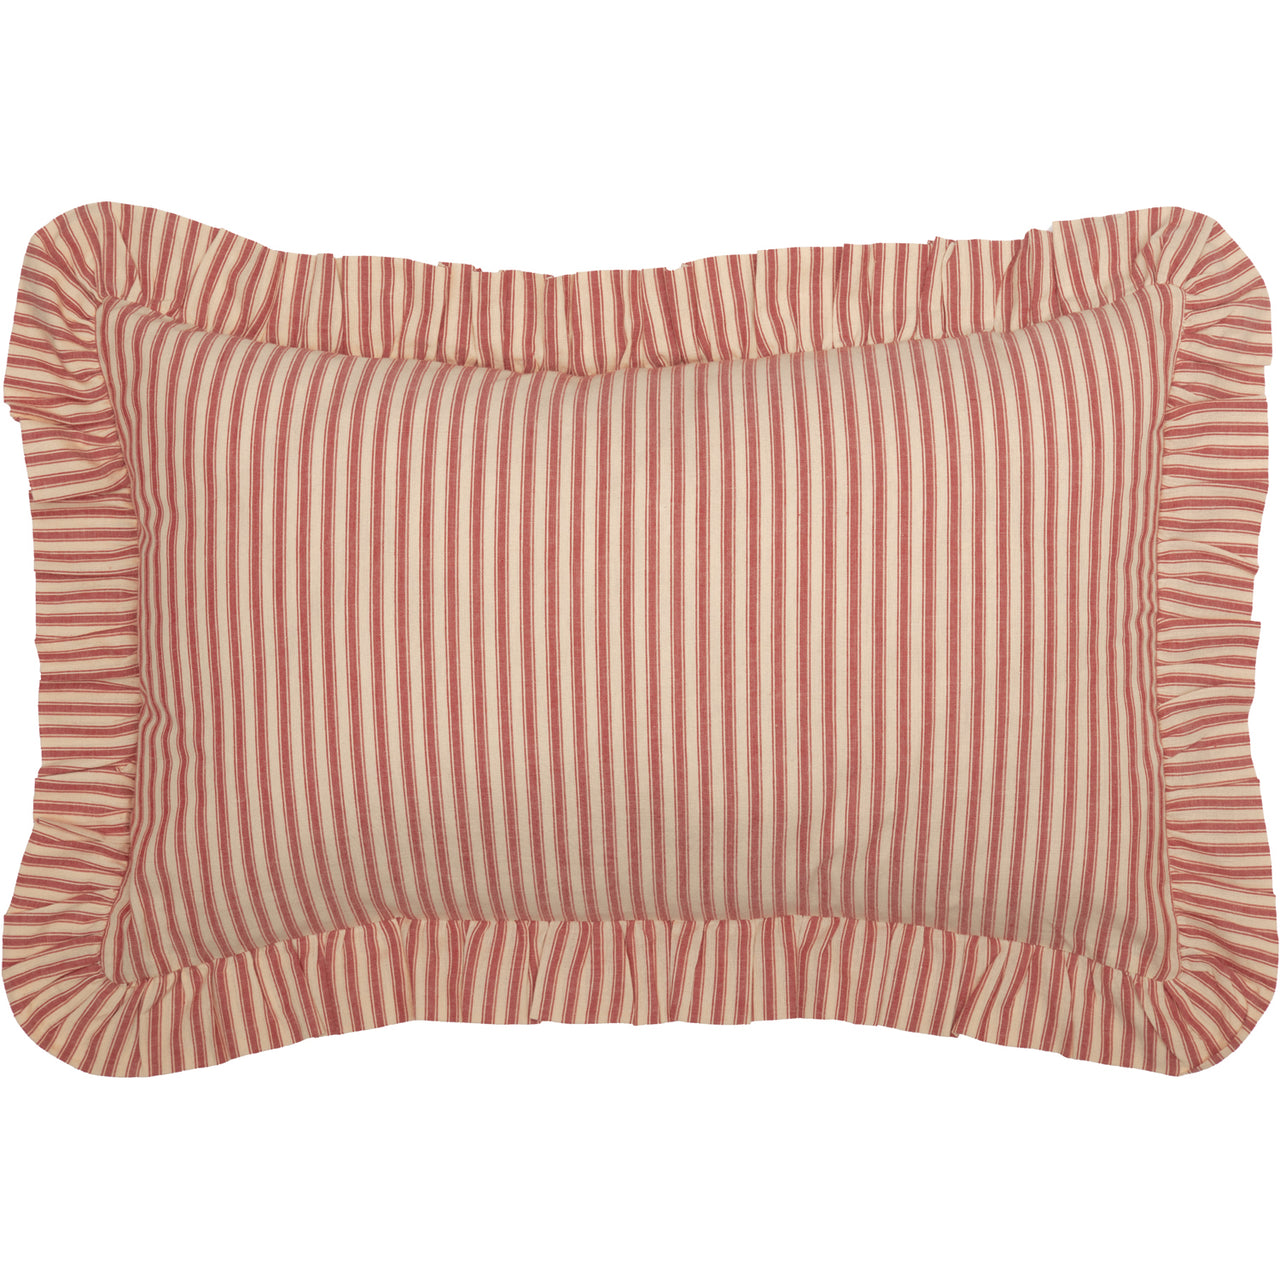 Sawyer Mill Red Ticking Stripe Fabric Pillow 14x22 VHC Brands